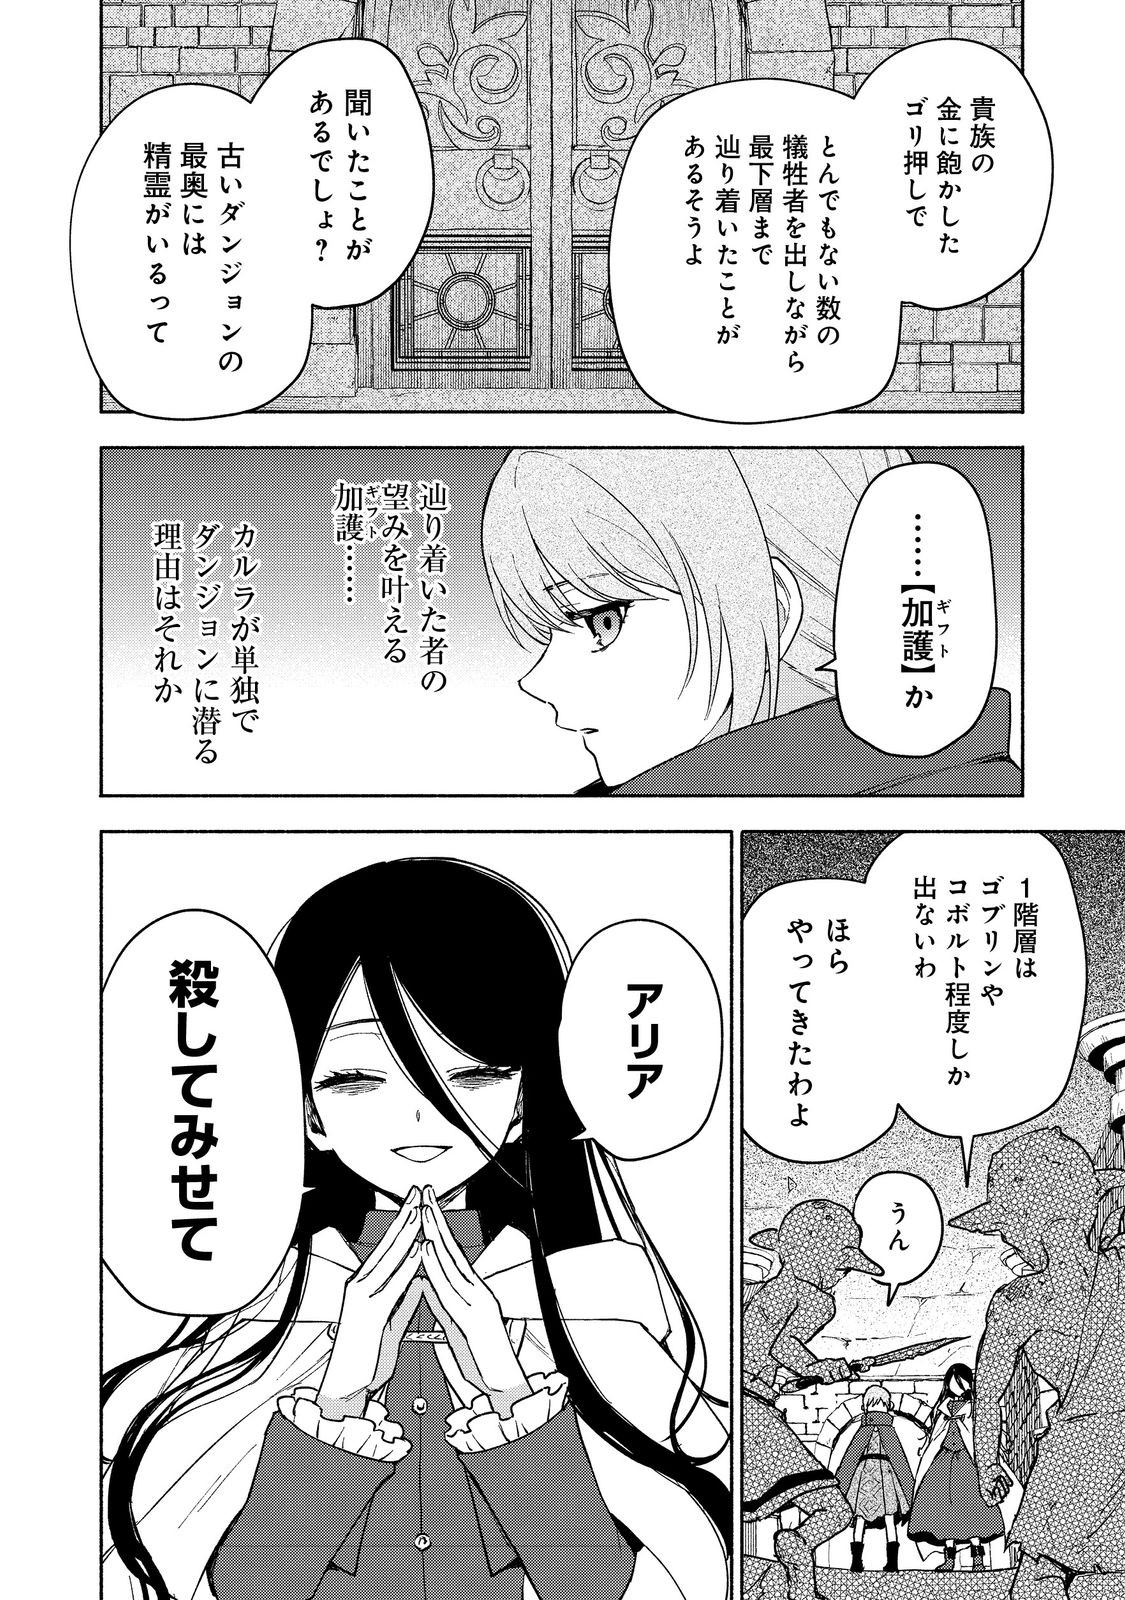 Otome Game no Heroine de Saikyou Survival - Chapter 23 - Page 10